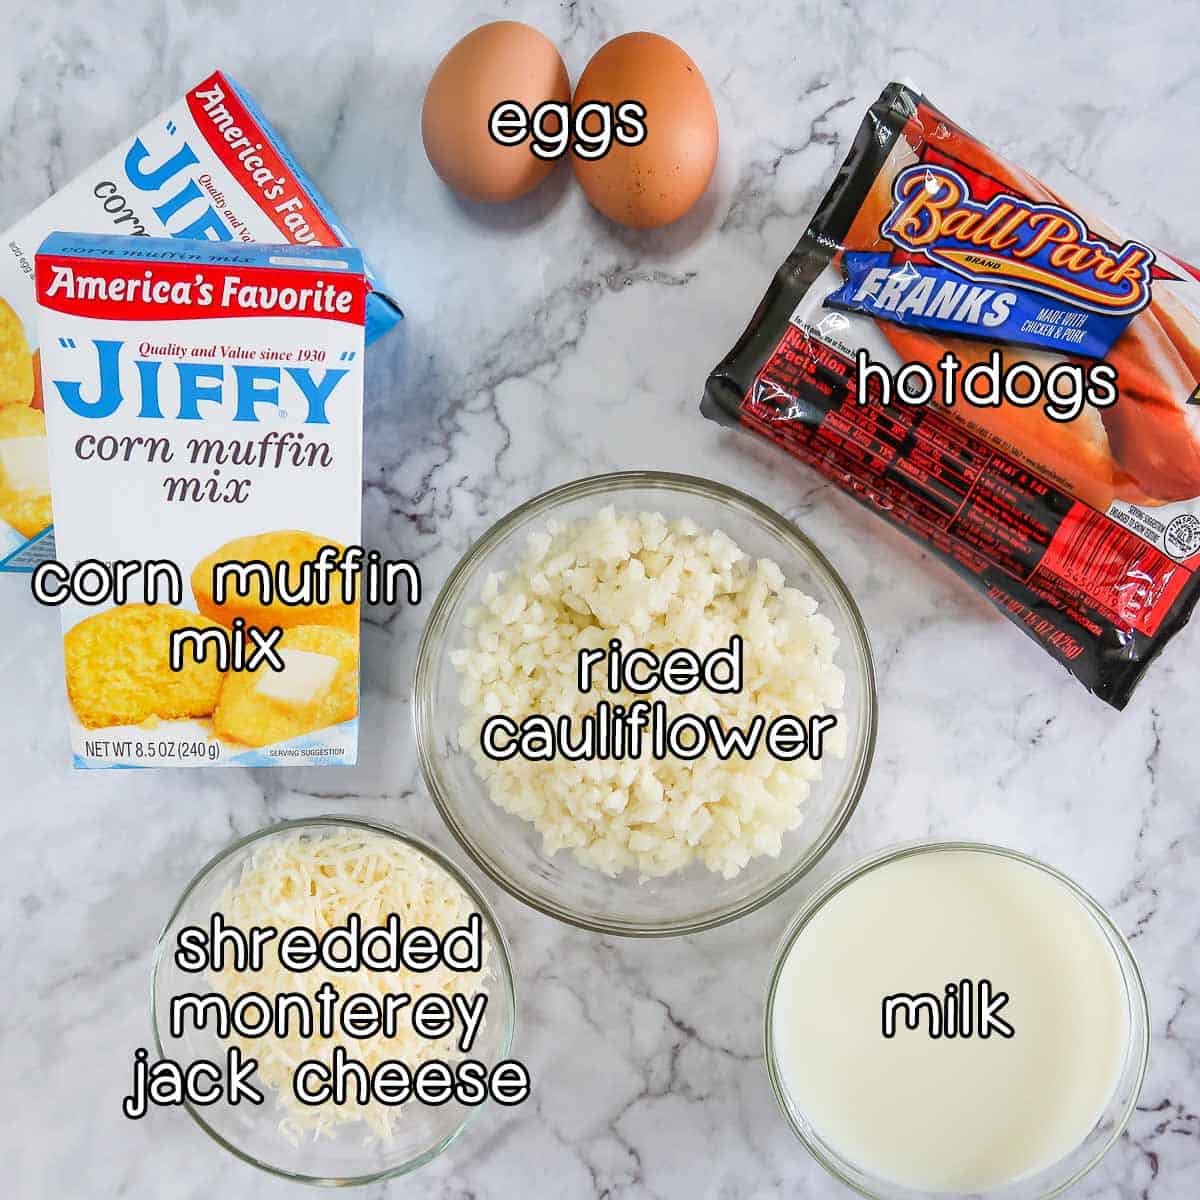 Overhead shot of ingredients - corn muffin mix, eggs, hotdogs, riced cauliflower, shredded Monterey Jack cheese, and milk.